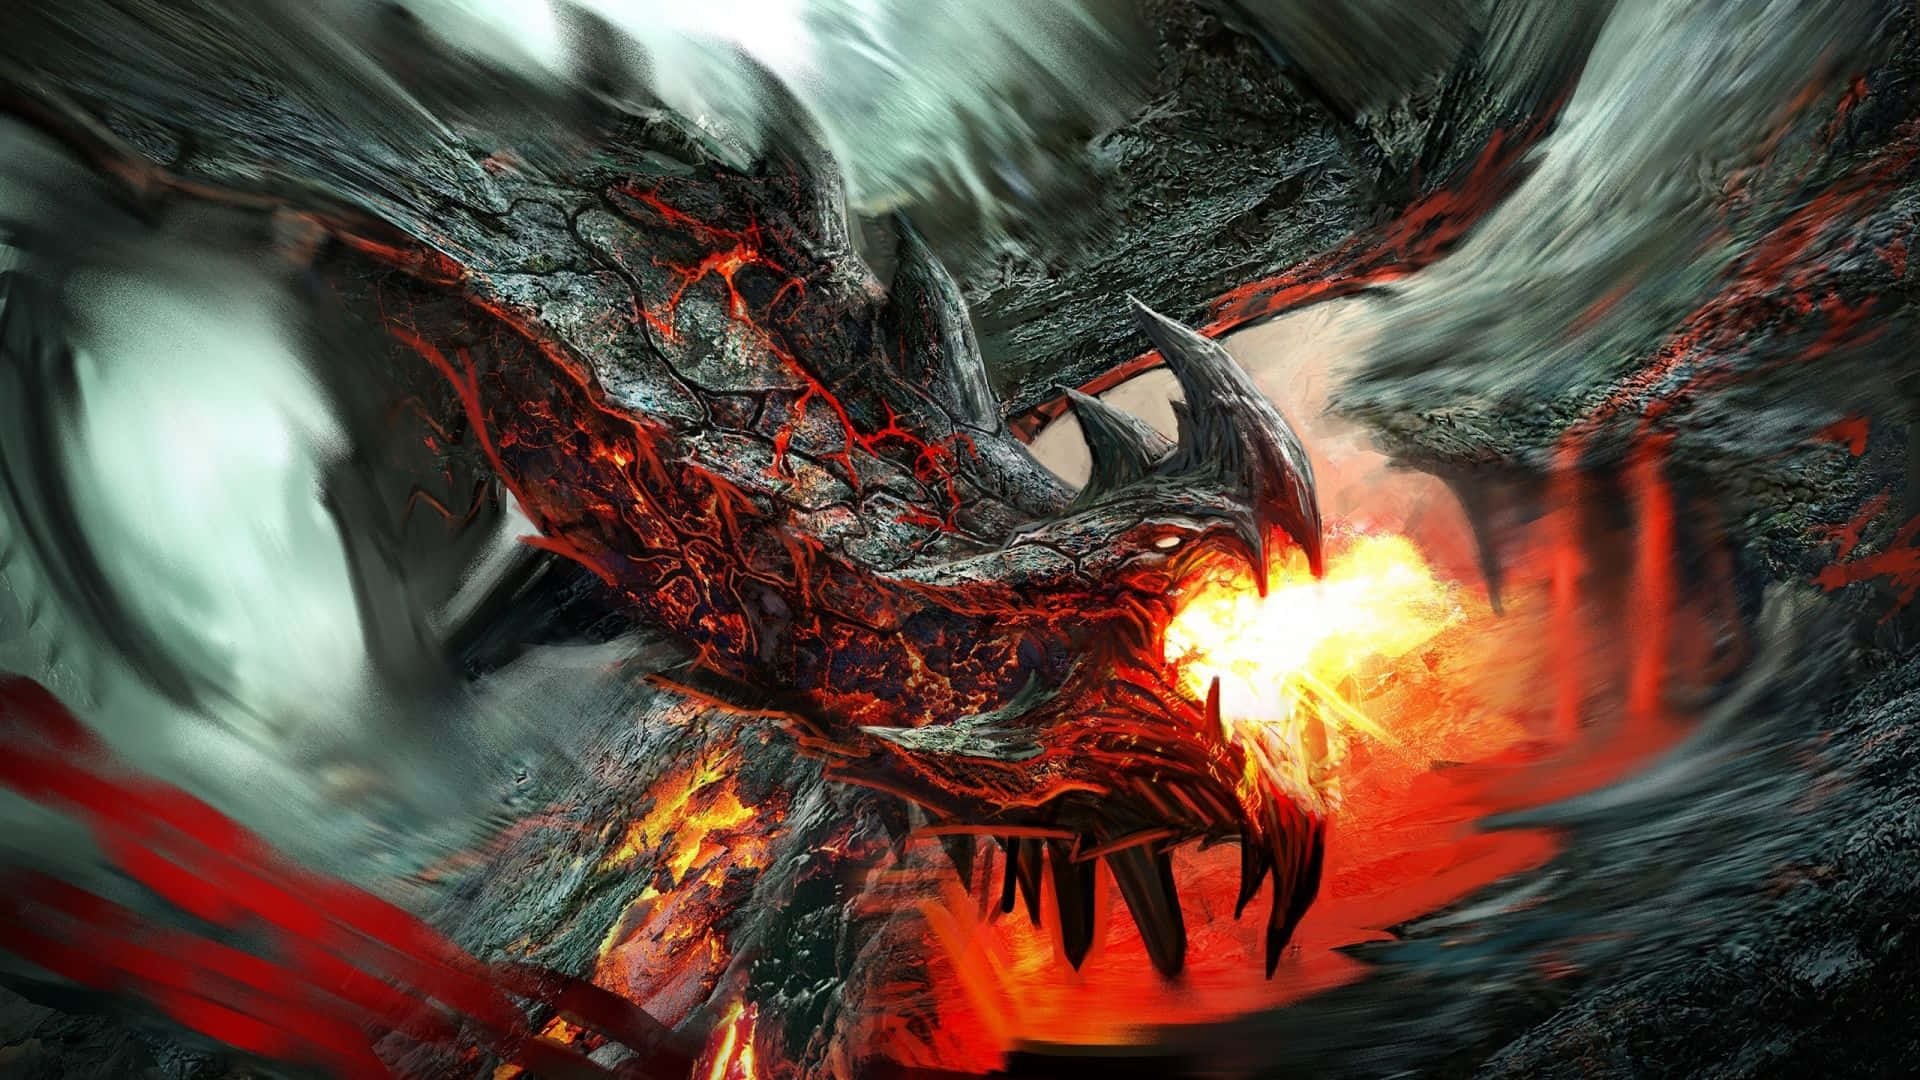 1080p Fire-breathing Dragon Fantasy Wallpaper